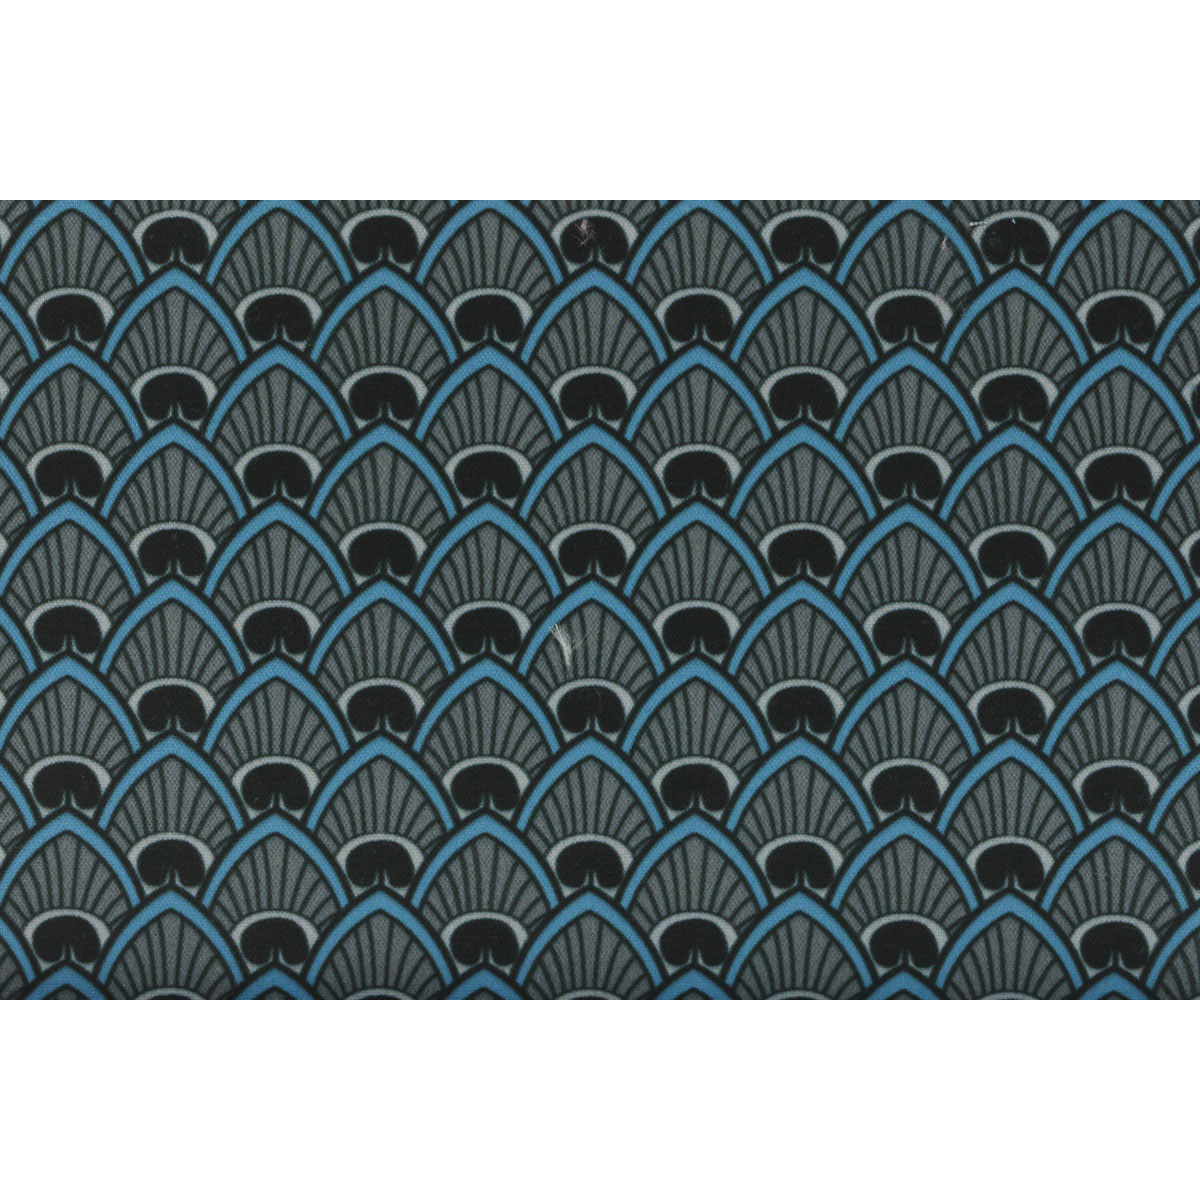 Tissu Wax - 150 x 160 cm - graine bleu